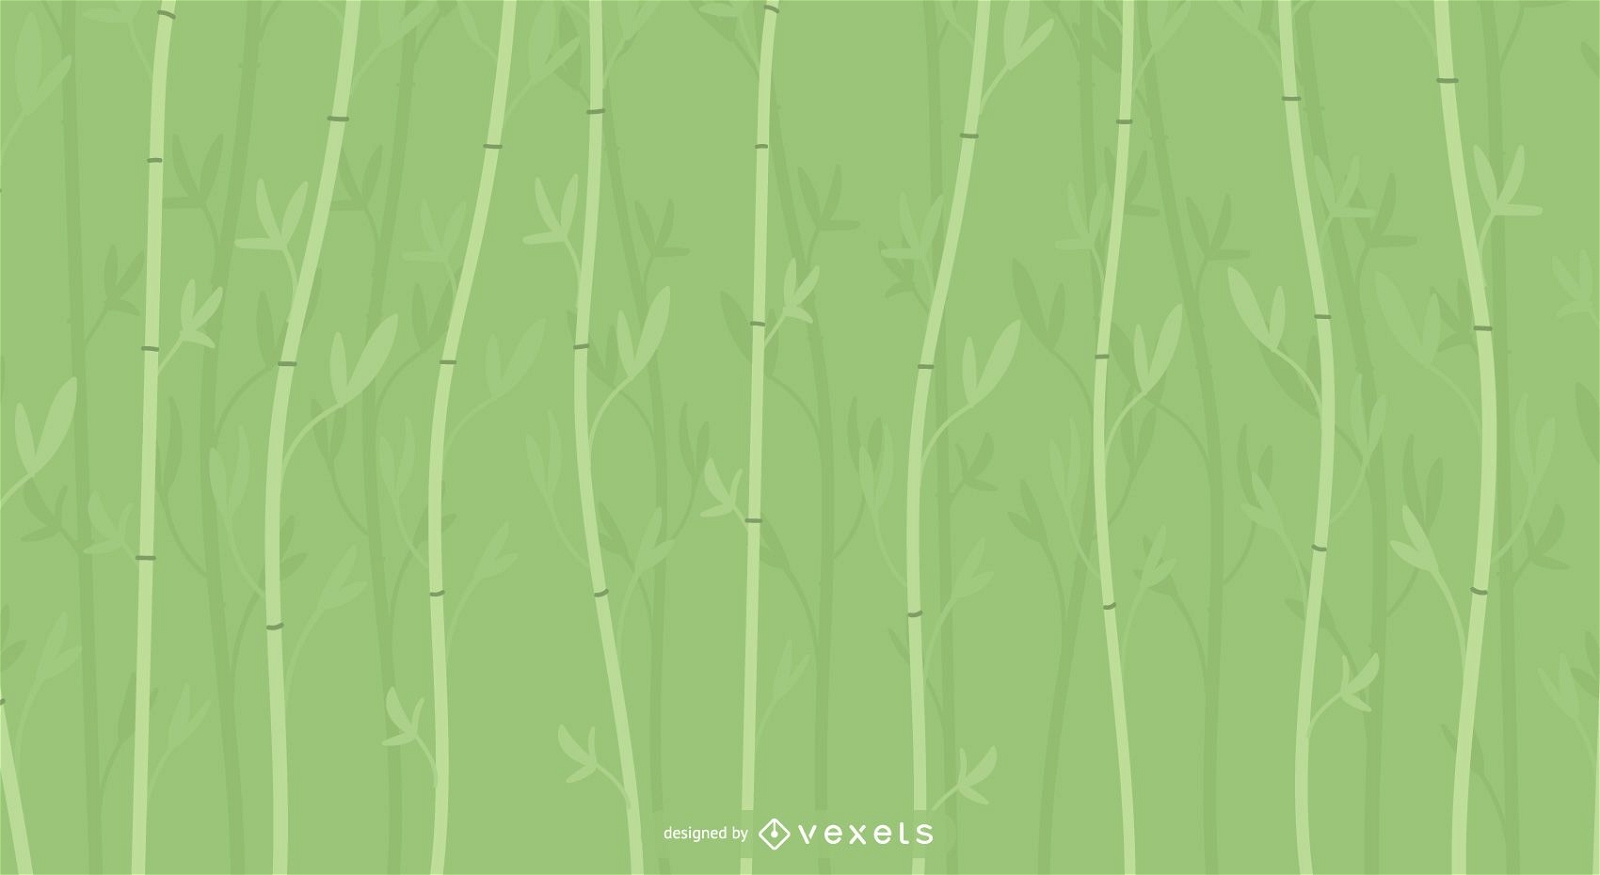 Bamboo background design